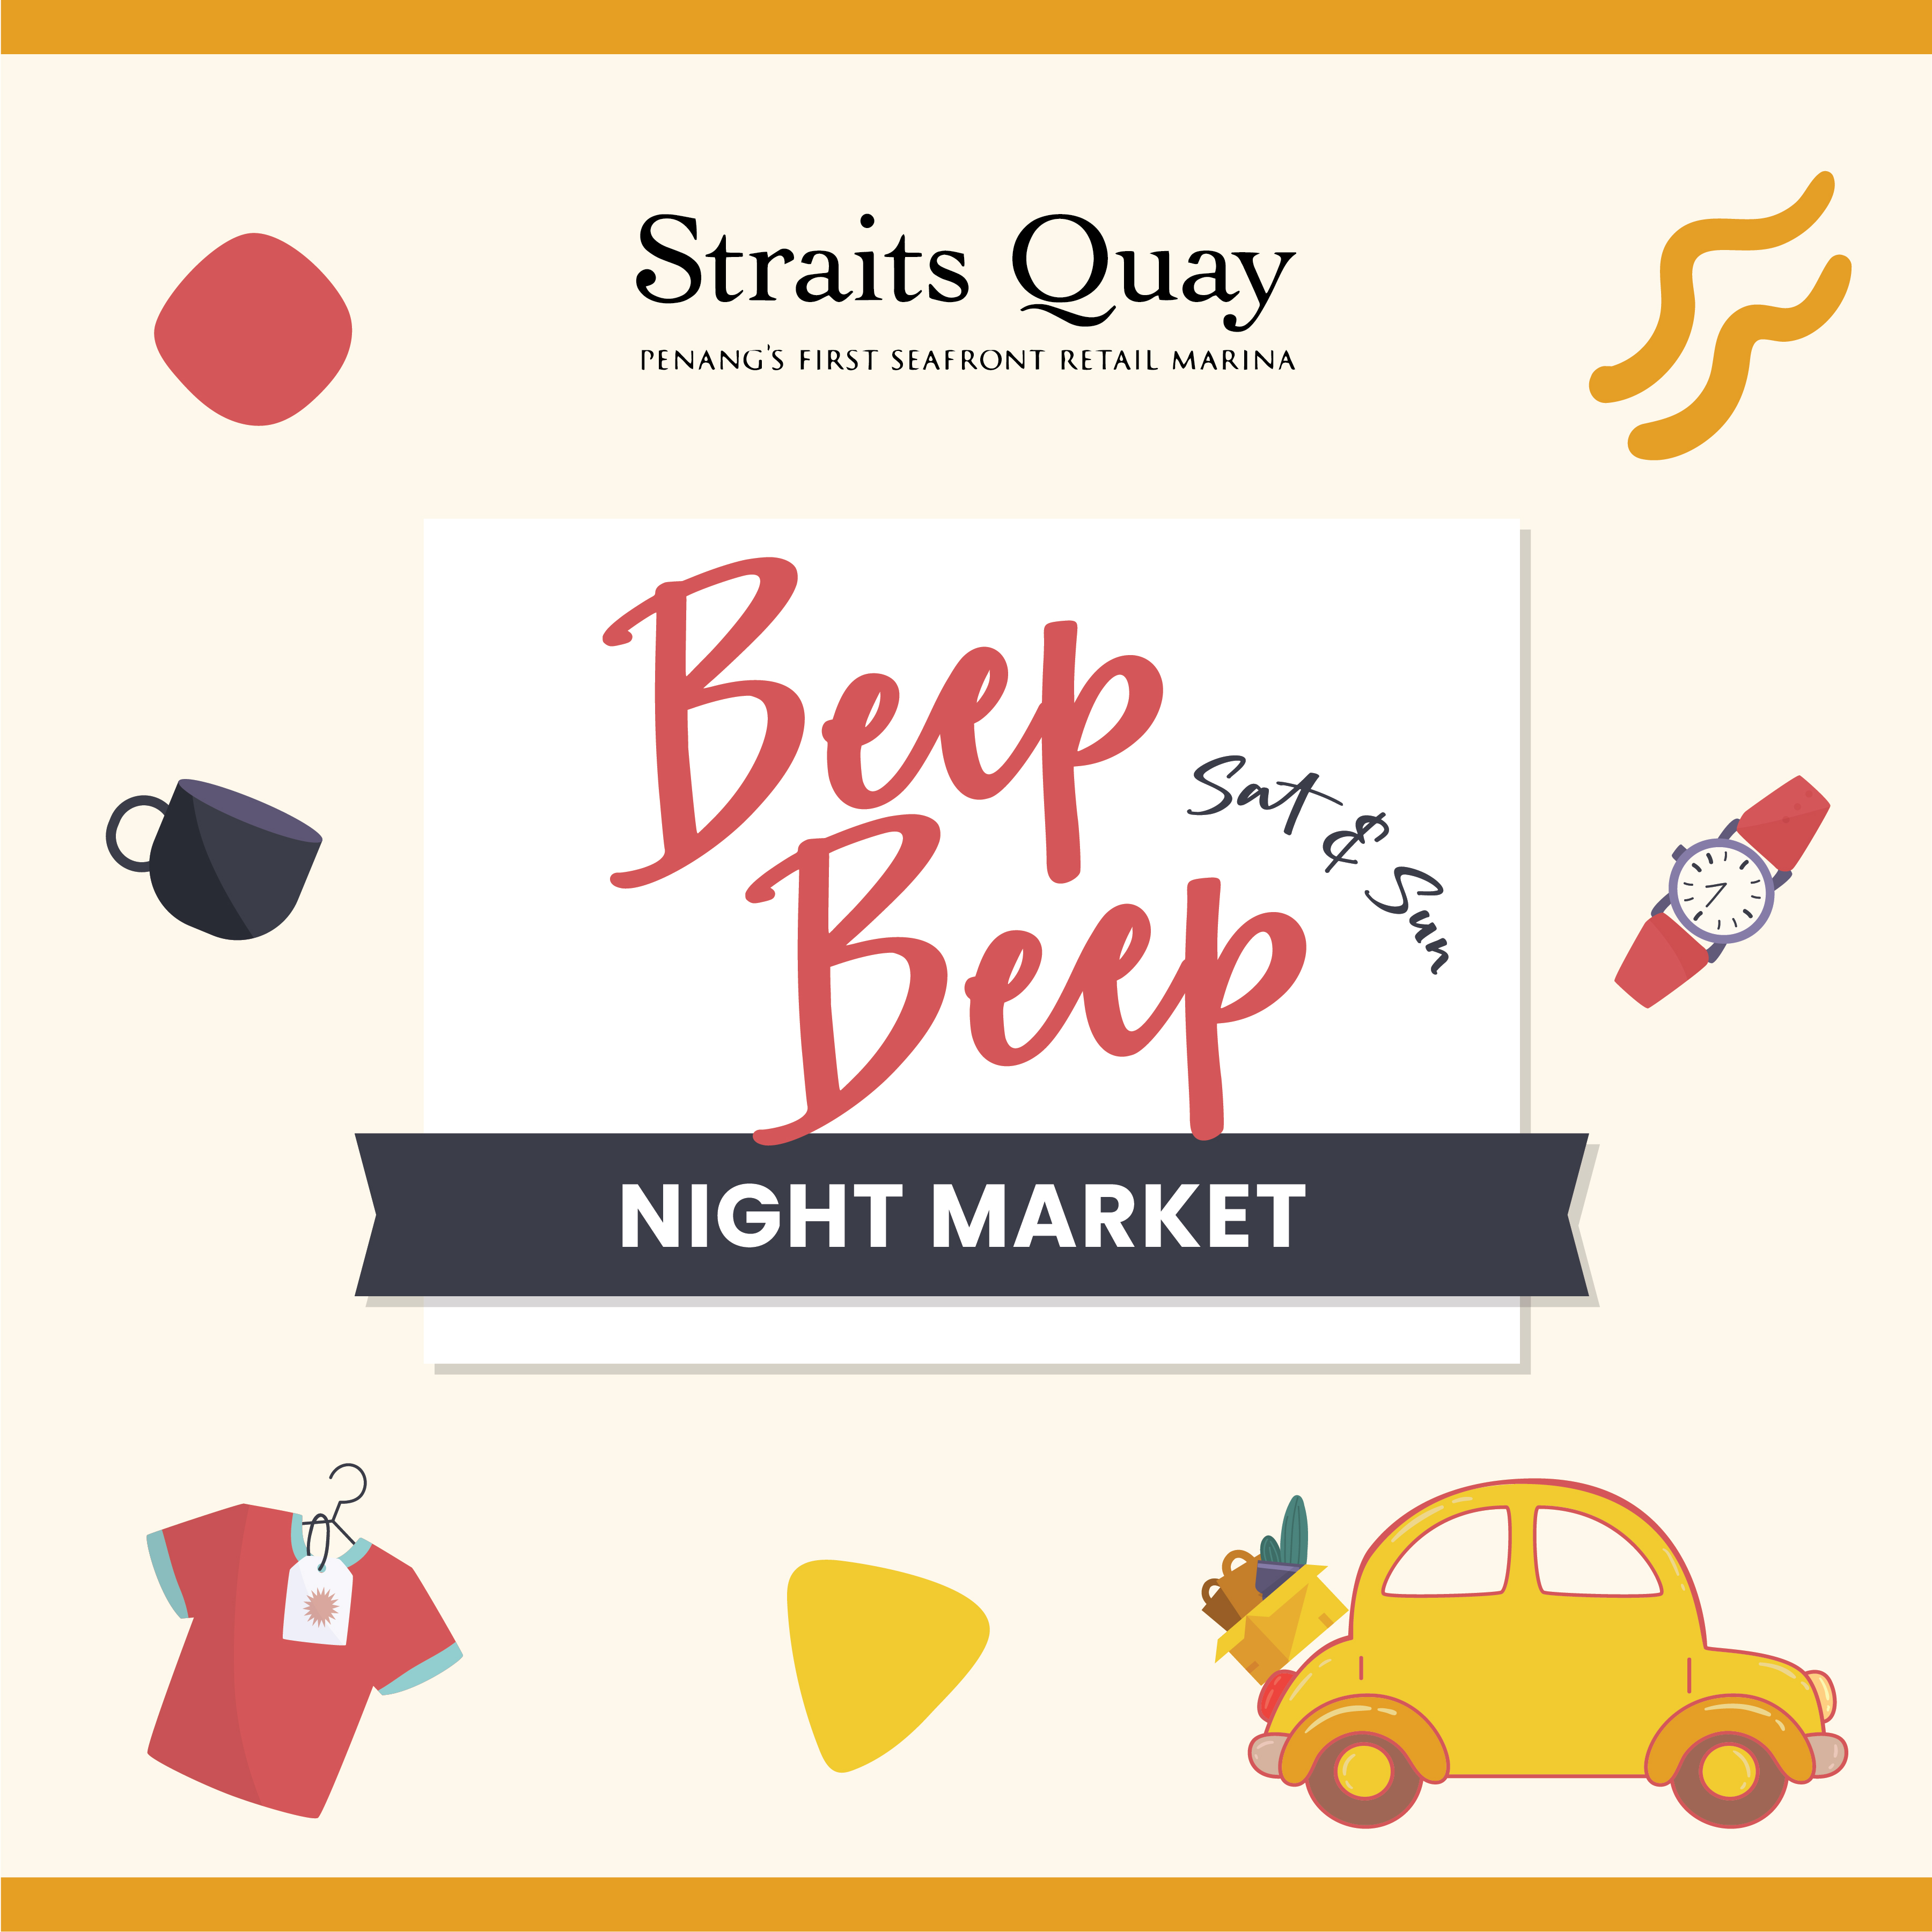 Beep beep night market social media-01